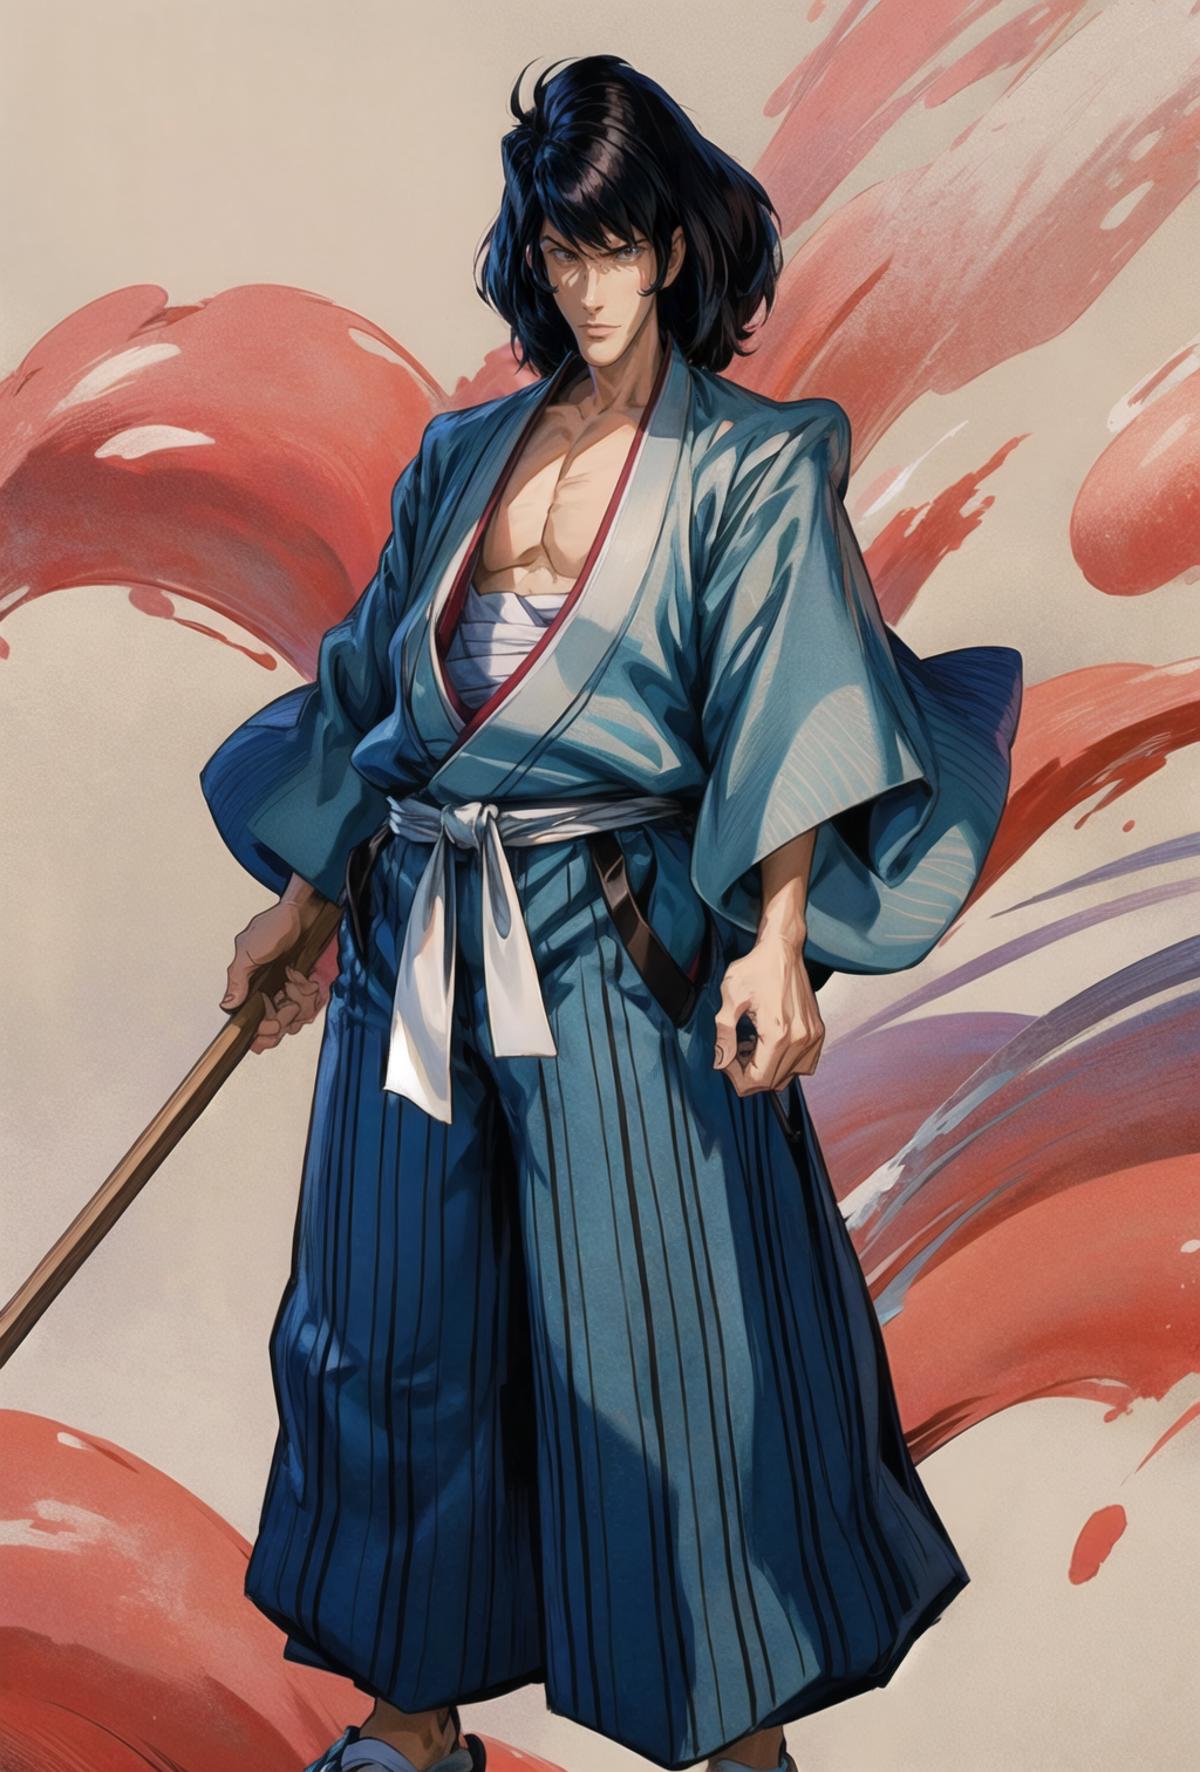 Goemon Ishikawa XIII - Lupin III image by Fenchurch